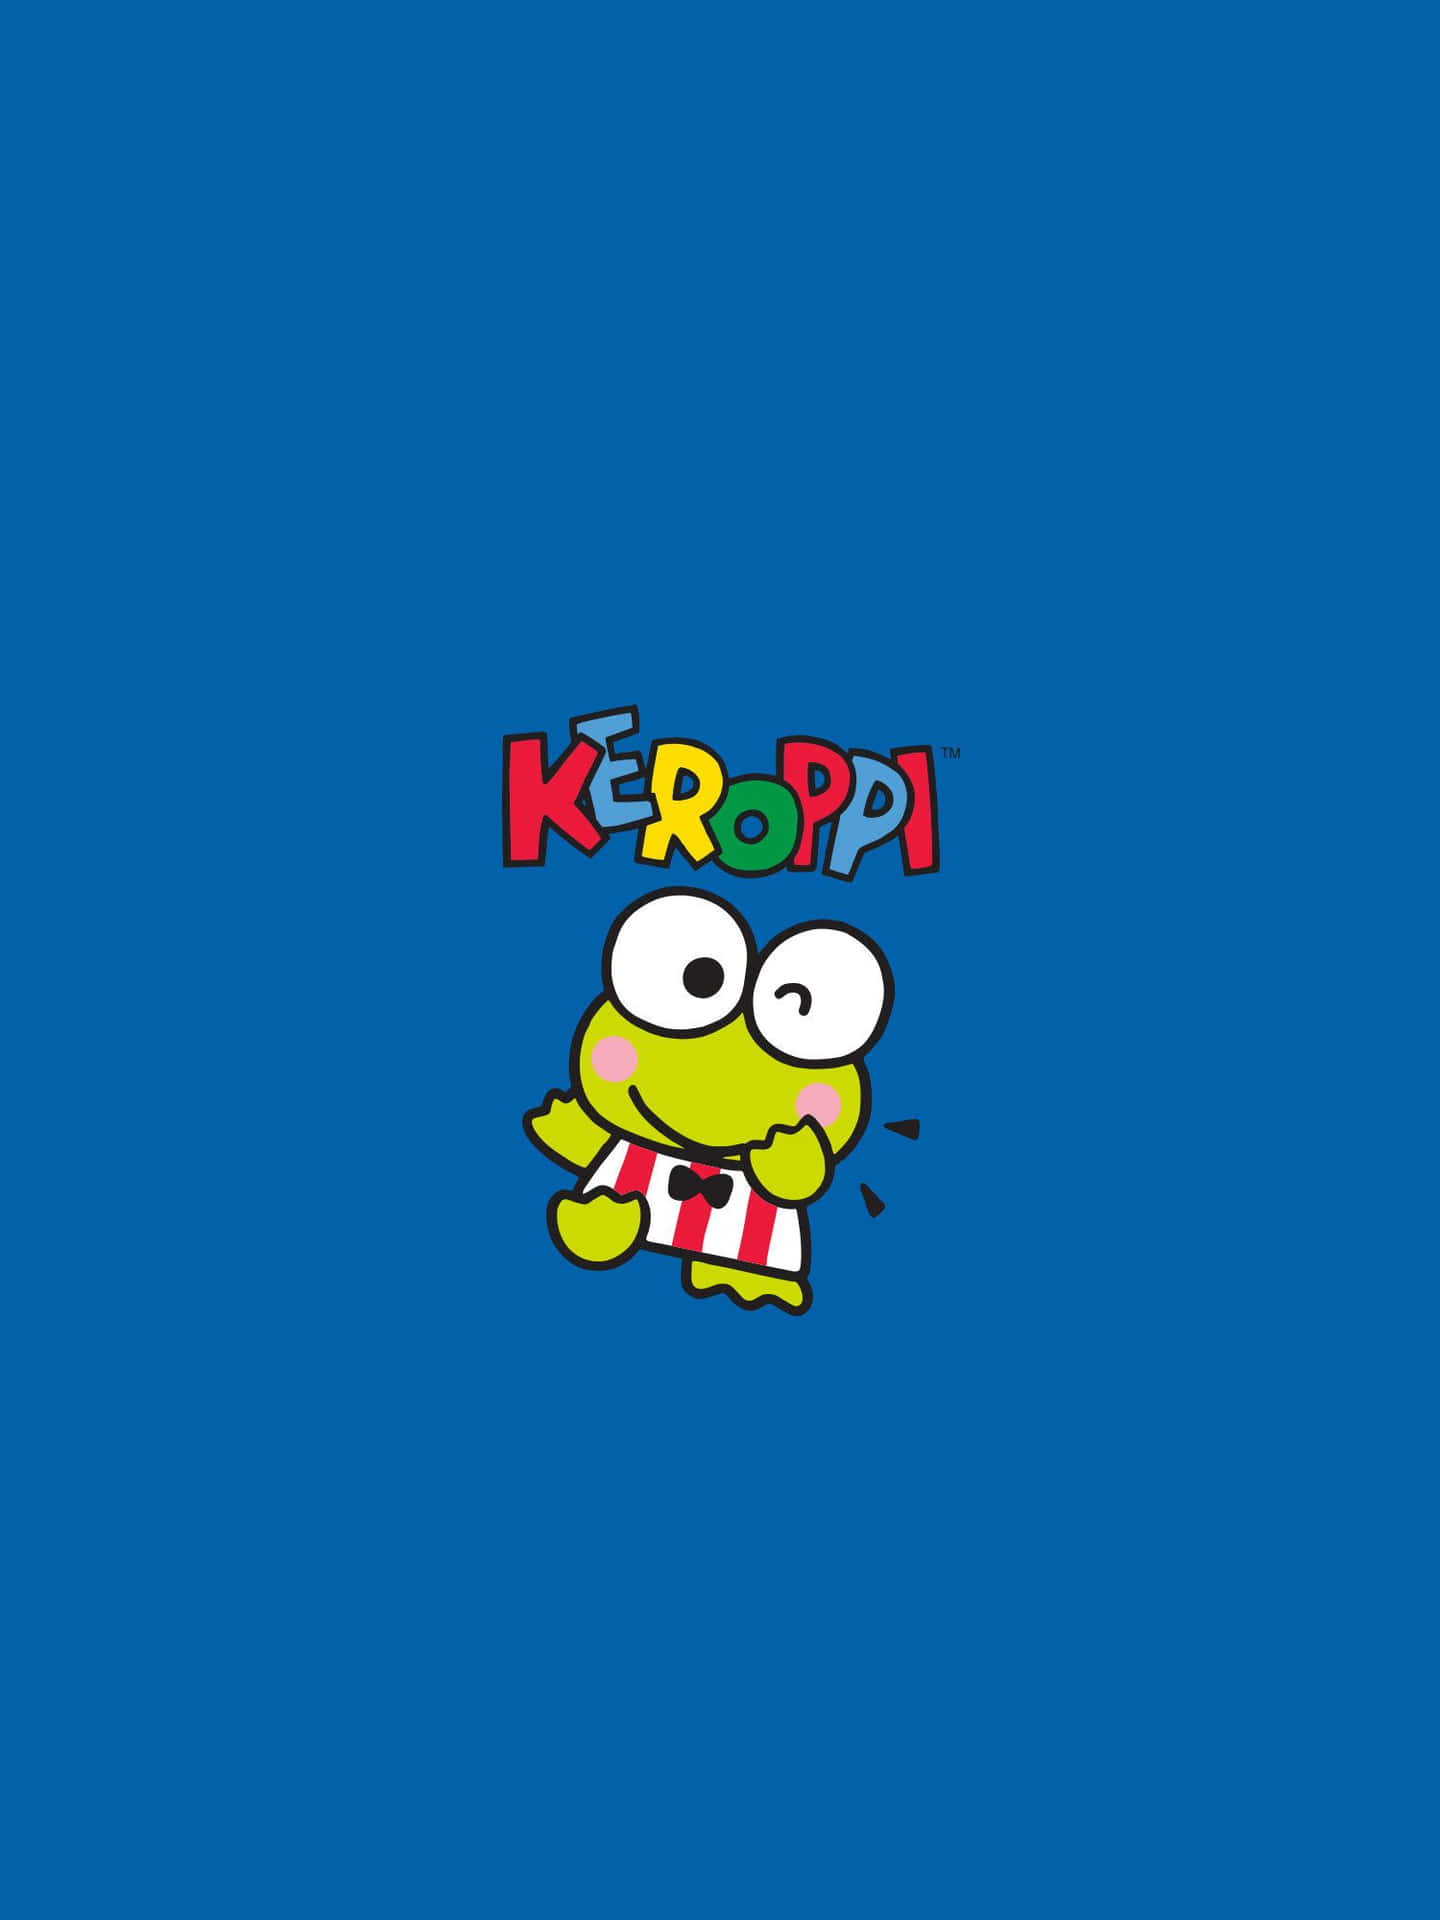 Free Keroppi Wallpaper Downloads, Keroppi Wallpaper for FREE